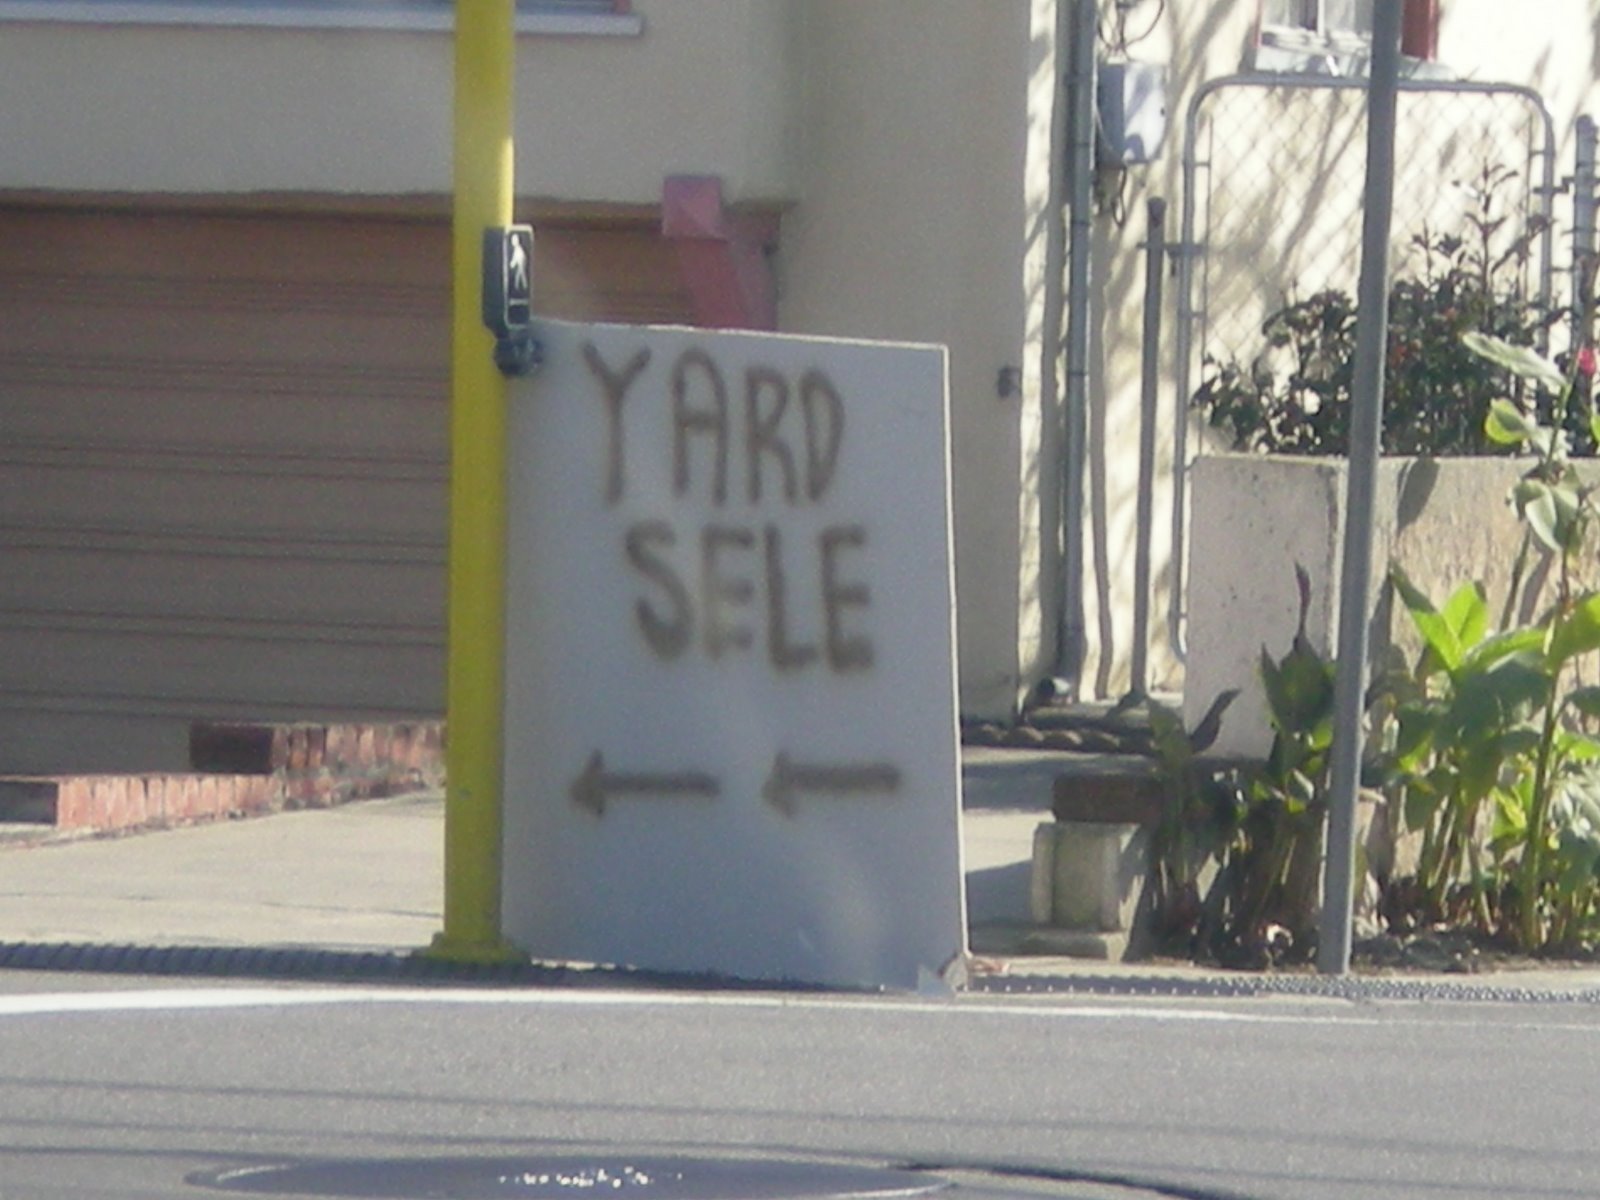 [yard+sele.jpg]